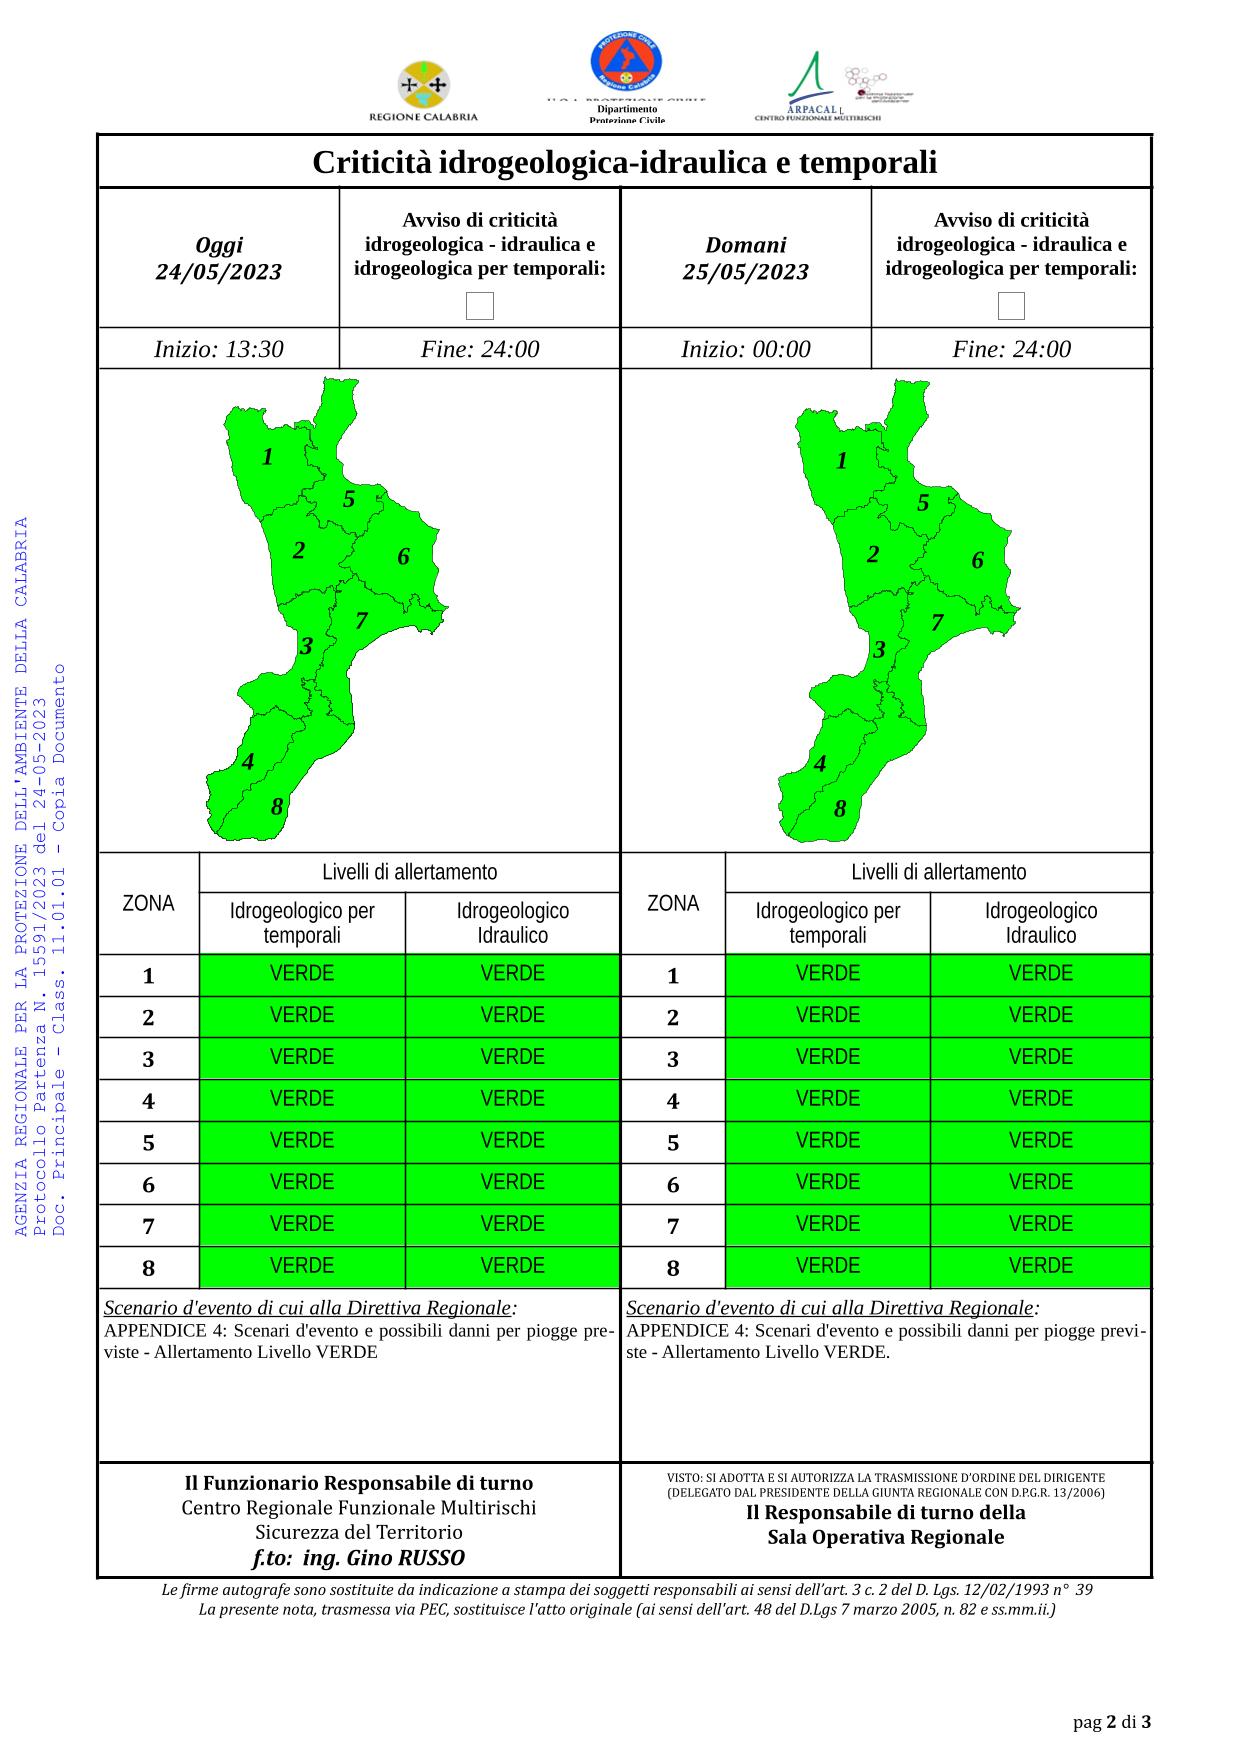 Criticità idrogeologica-idraulica e temporali in Calabria 24-05-2023